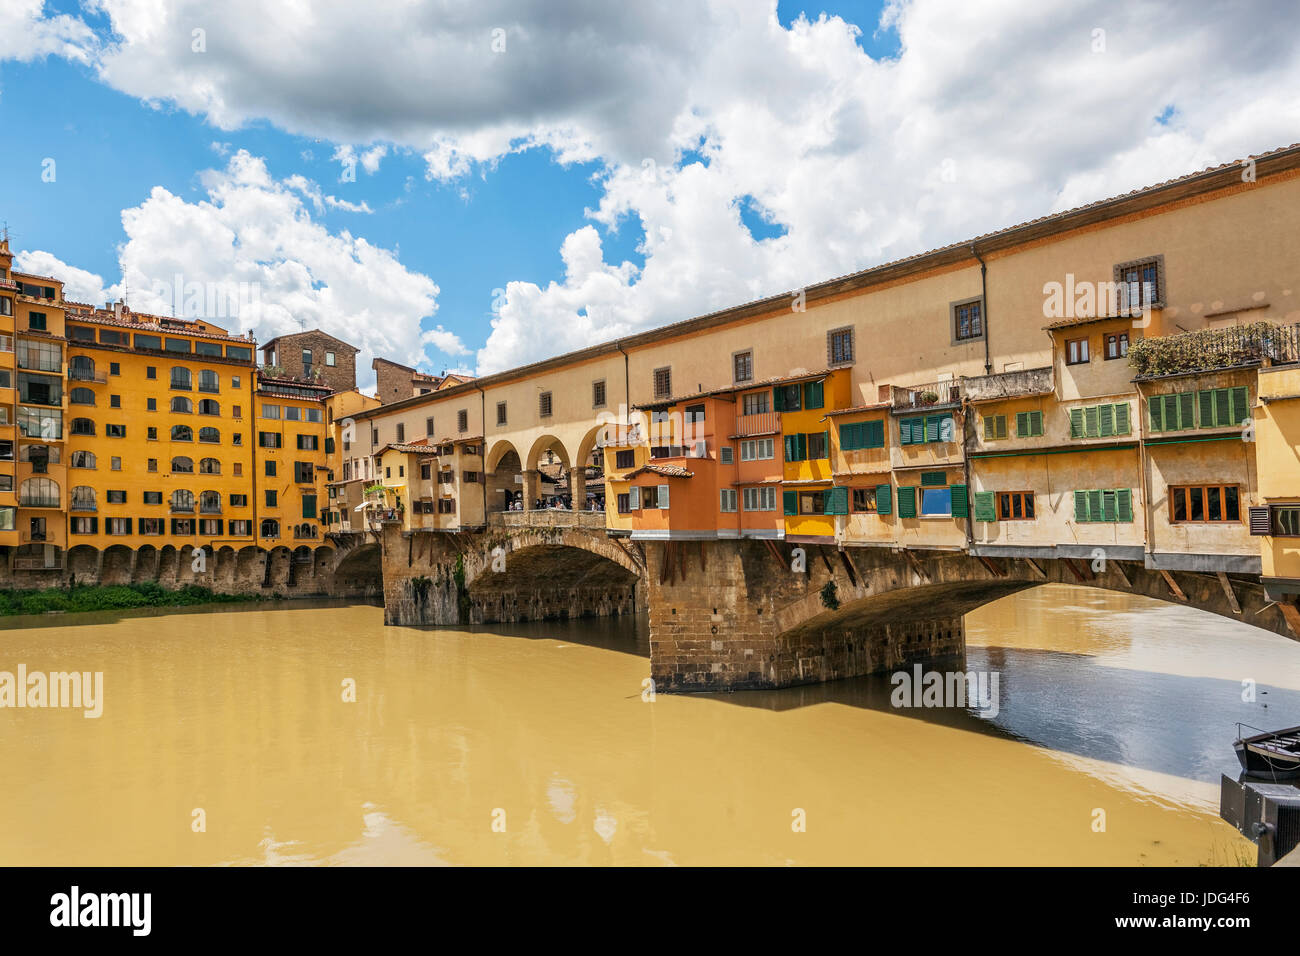 The river Arno and Ponte Vecchio bridge in Firenze (Florence), Italy Stock Photo